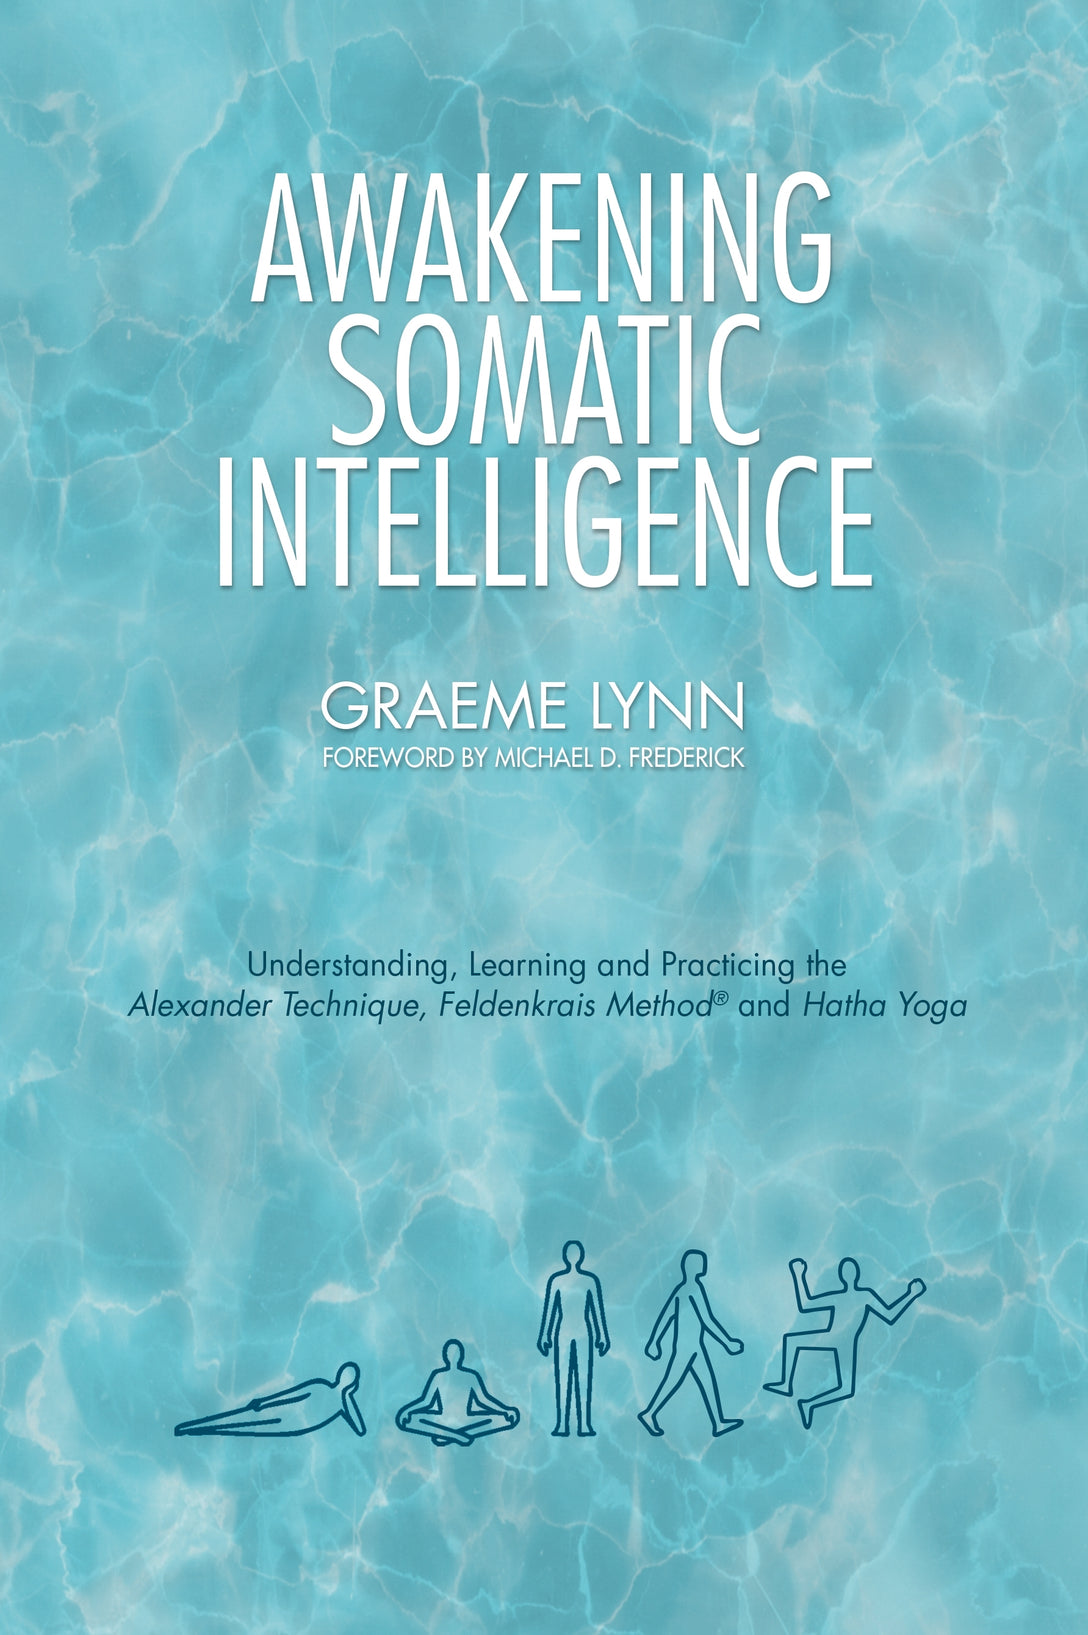 Awakening Somatic Intelligence by Graeme Lynn